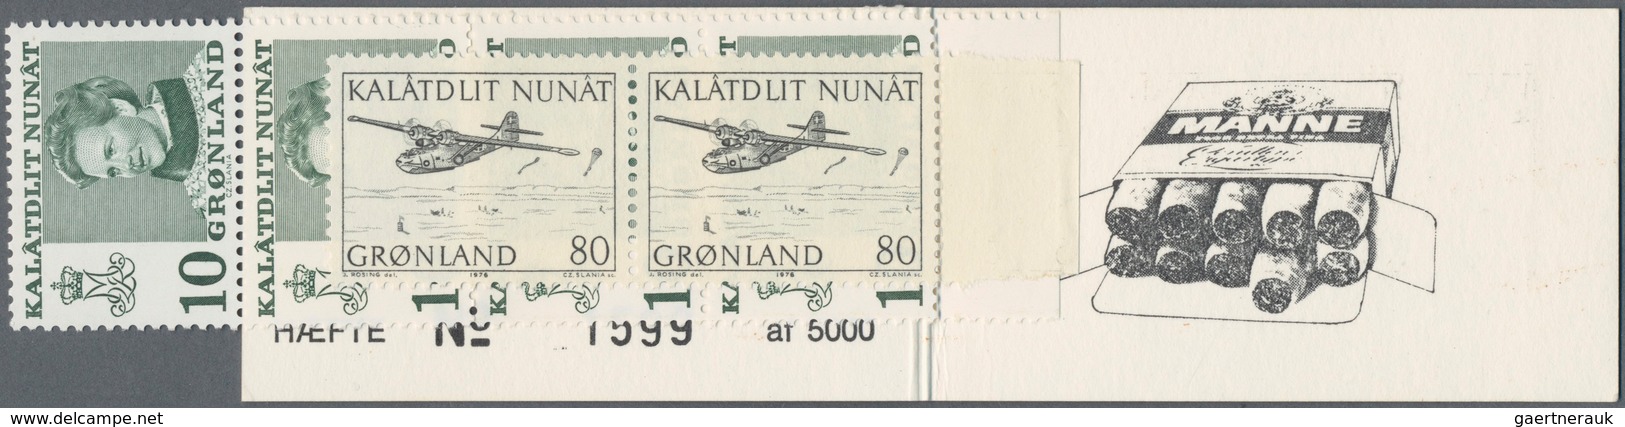 Dänemark - Grönland: 1977, Tobaco, Privat Advertising Booklet DAKA Nr. 3 (DR Nr. 5) Mint Never Hinge - Briefe U. Dokumente